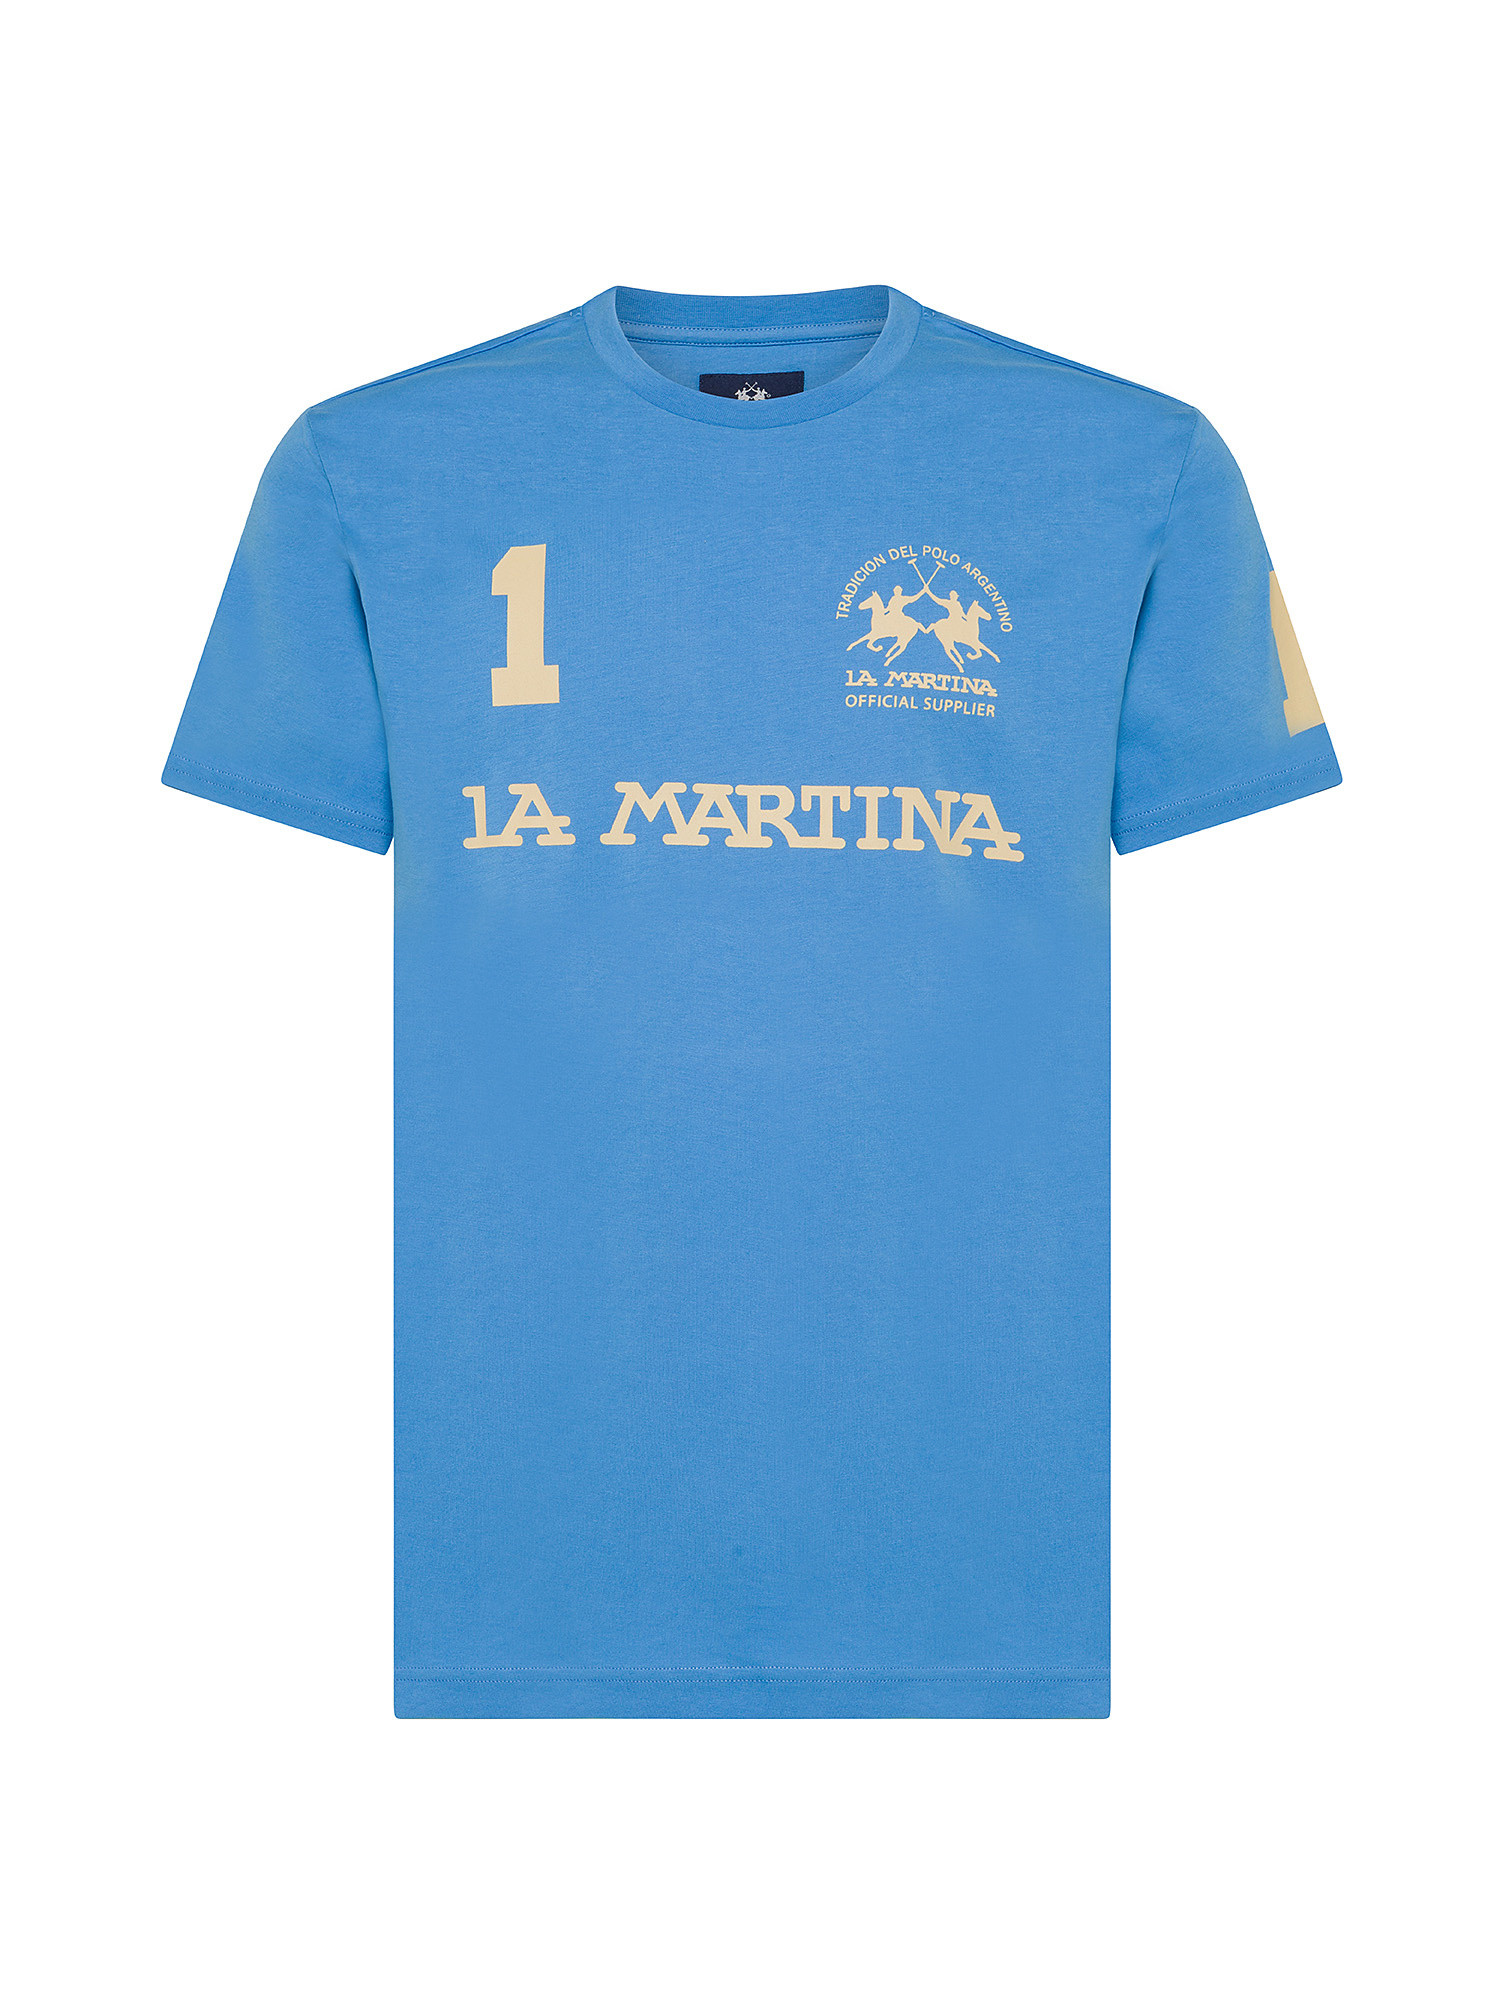 La Martina - T-shirt maniche corte in cotone jersey, Blu, large image number 0